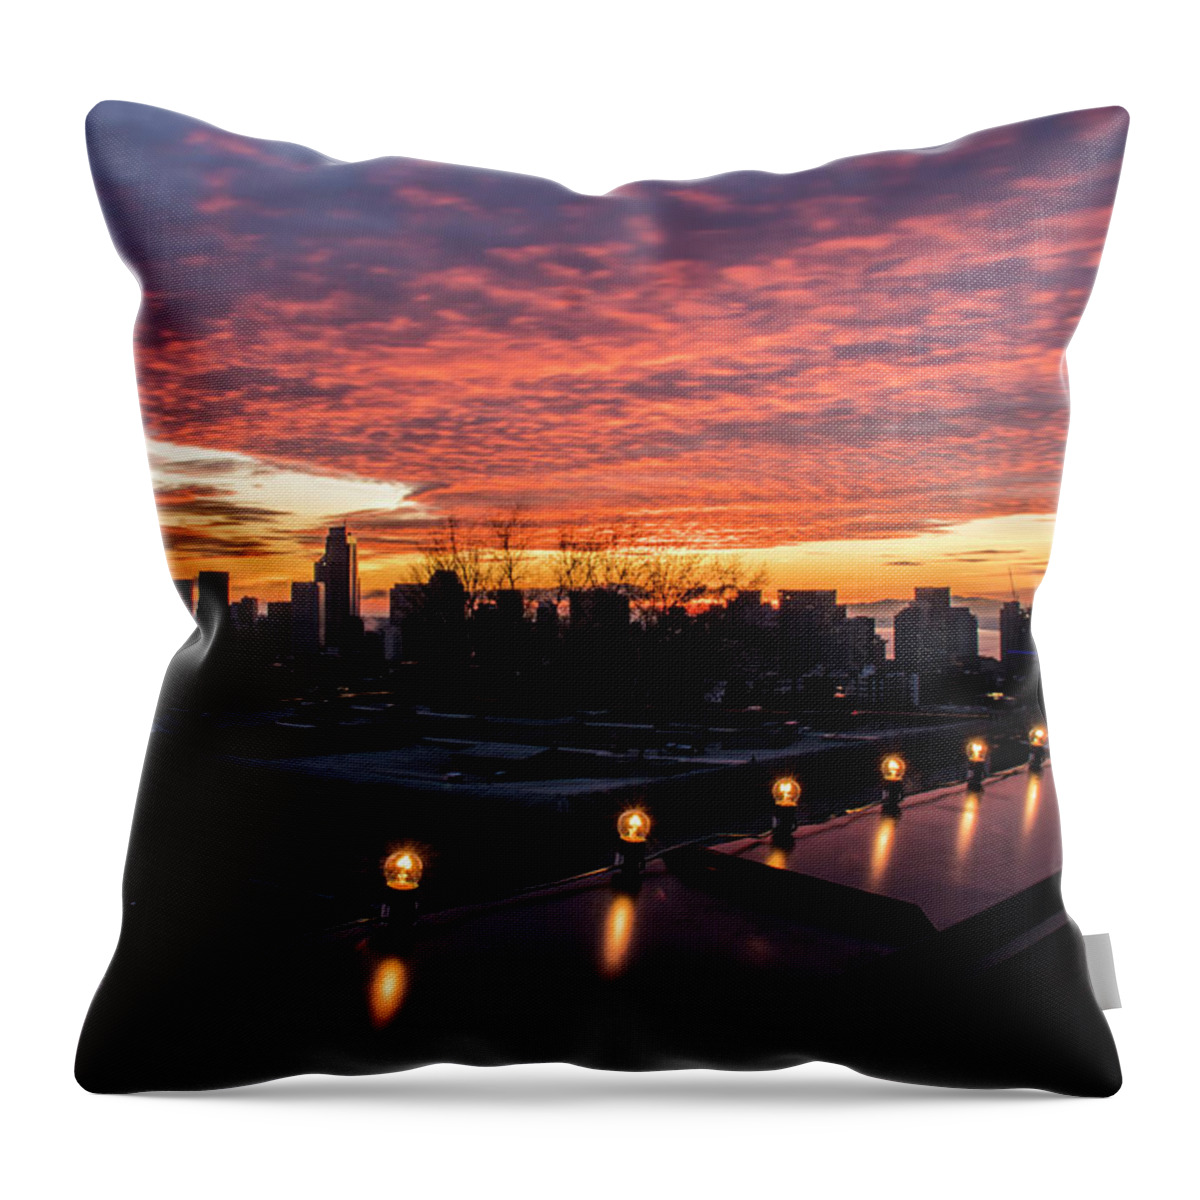 Seattle Throw Pillow featuring the photograph Vibrant Seattle Sunset by Matt McDonald